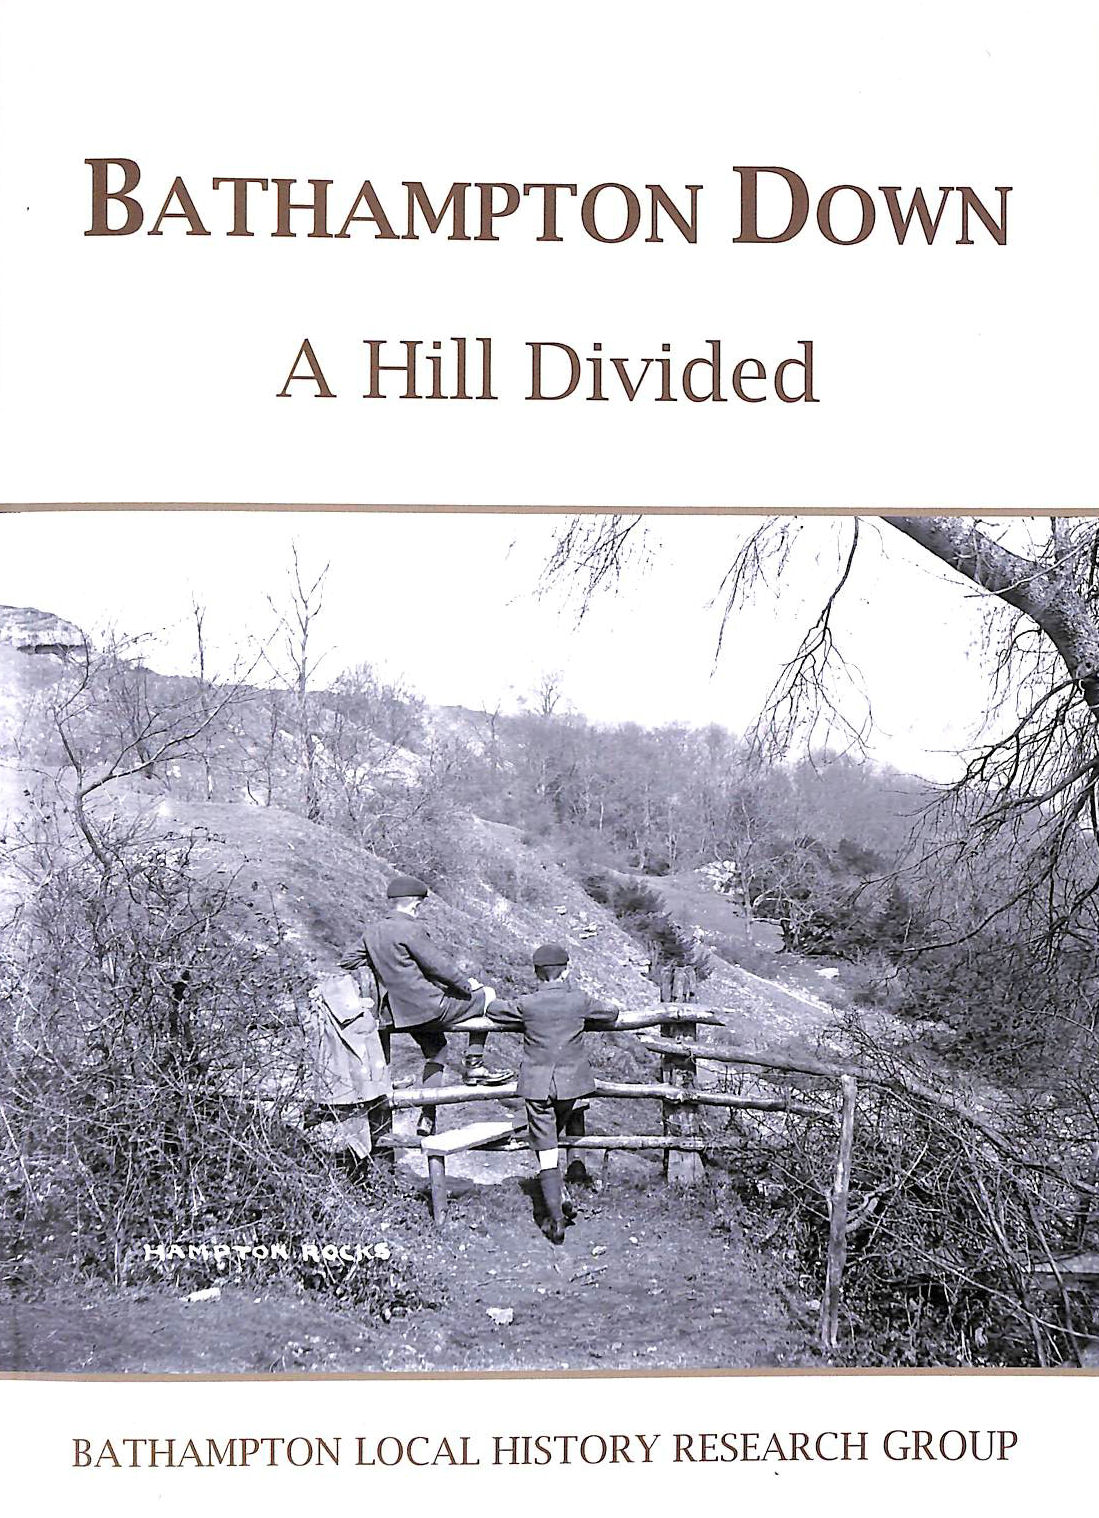 MARY CLARK, GILLIAN HUGGINS - Bathampton Down: A Hill Divided